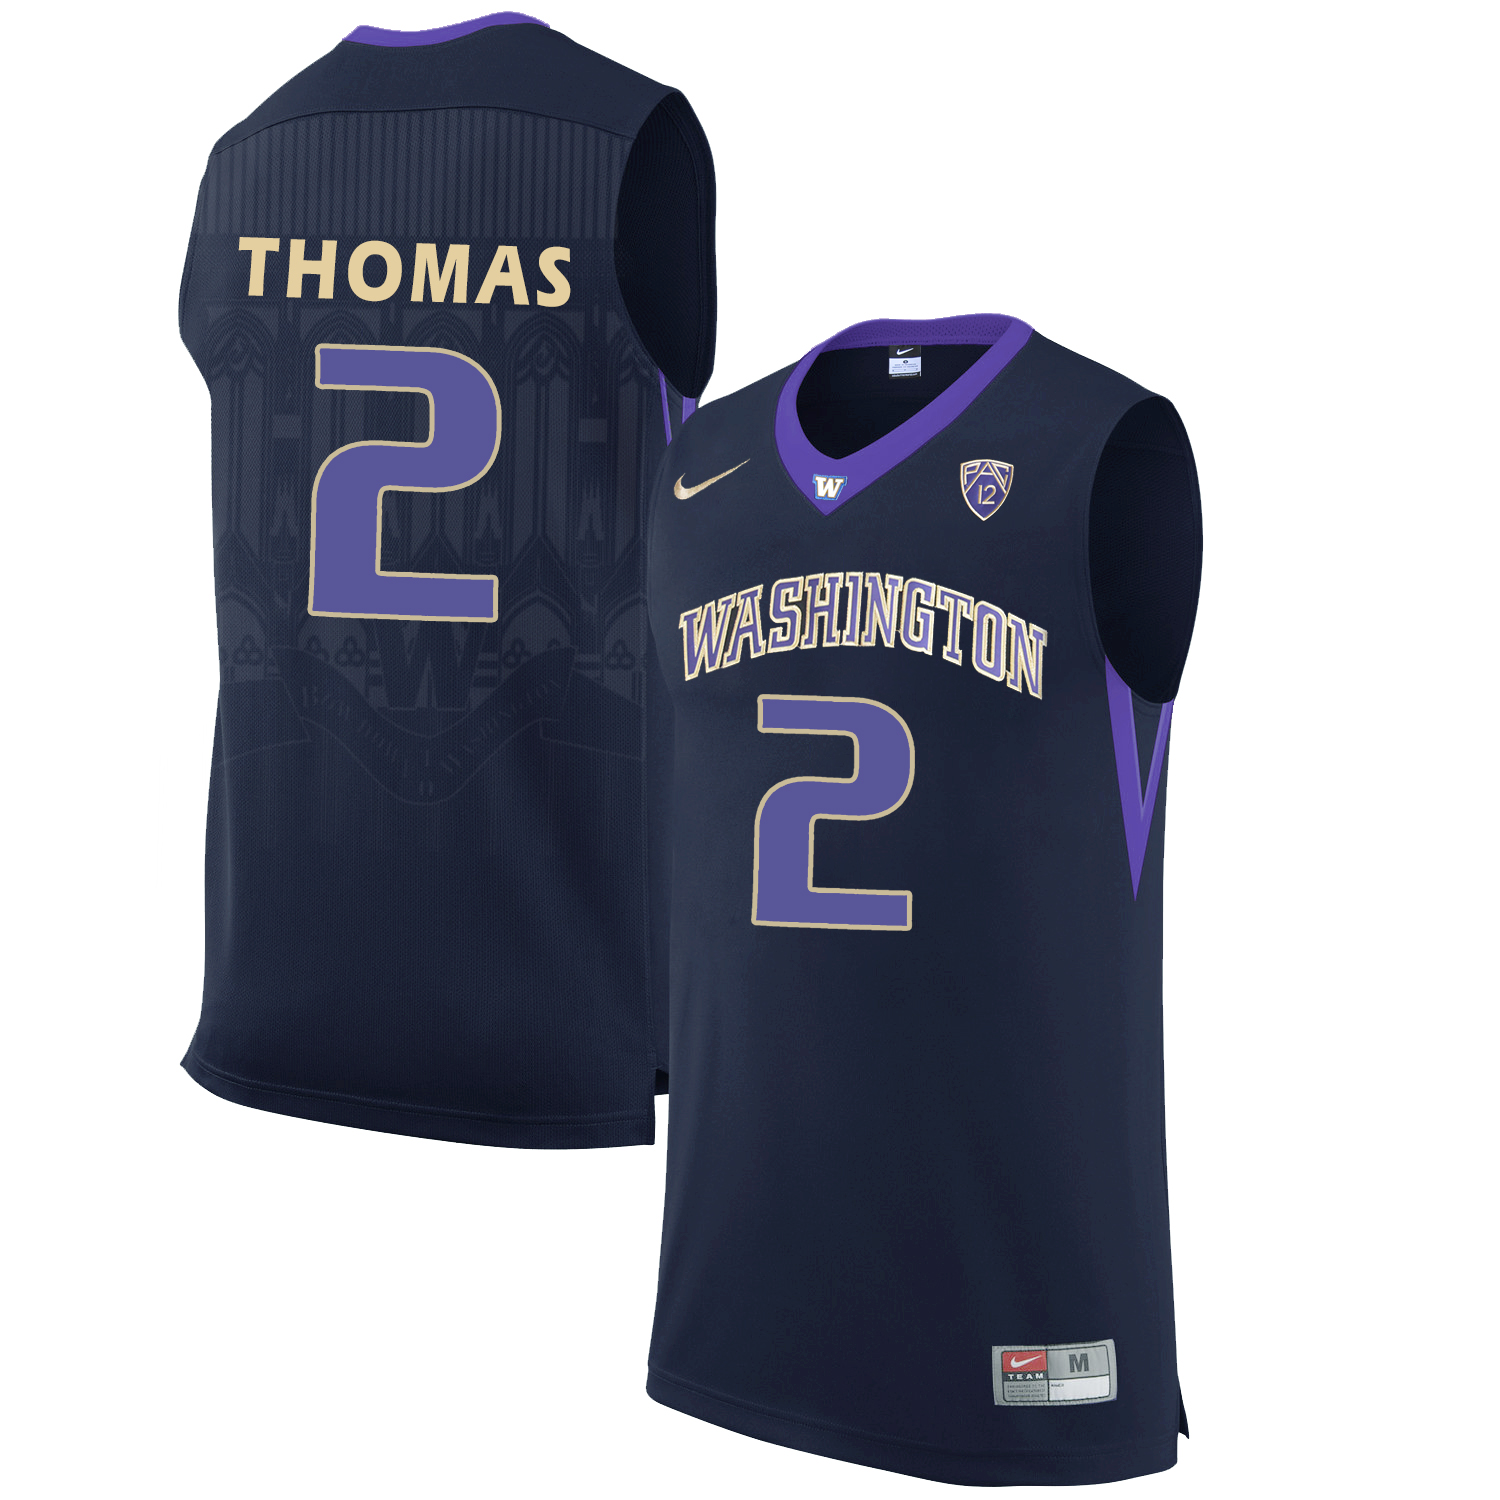 Washinton Huskies 2 Isaiah Thomas Black With Portait College Basketball Jersey - Click Image to Close